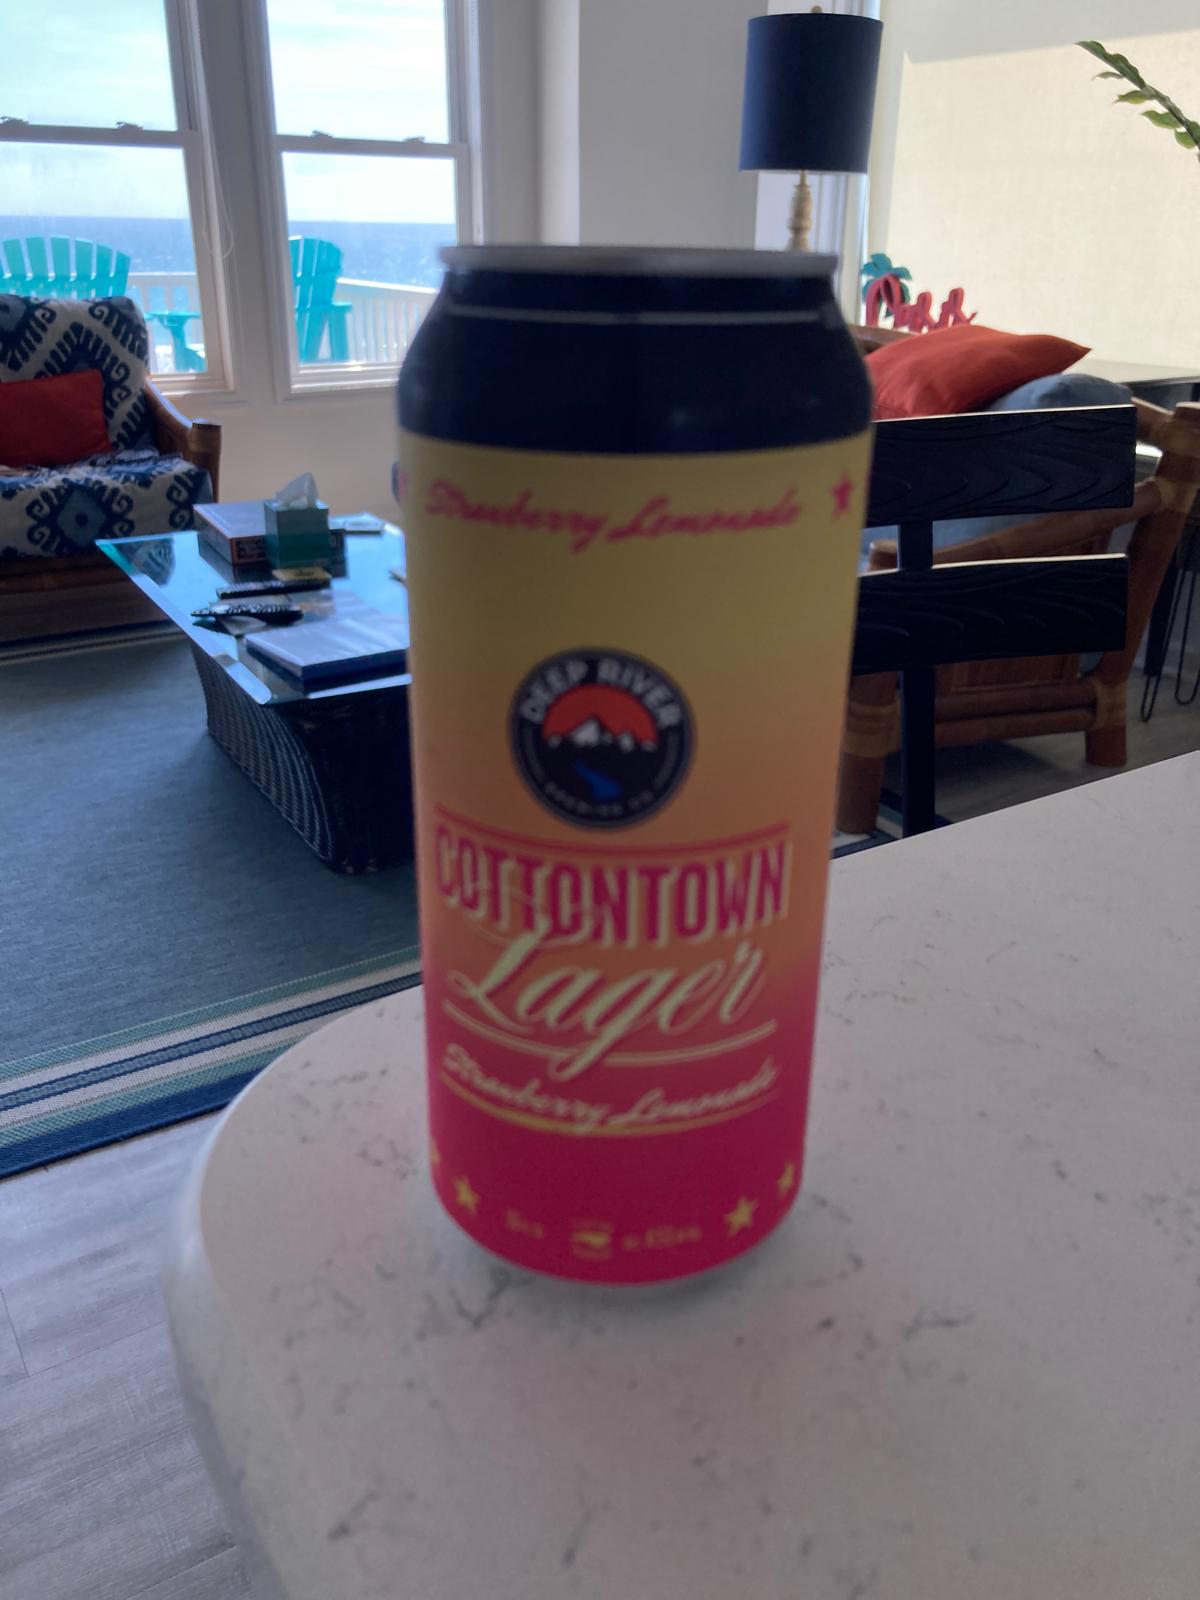 Cottontown - Strawberry Lemonade